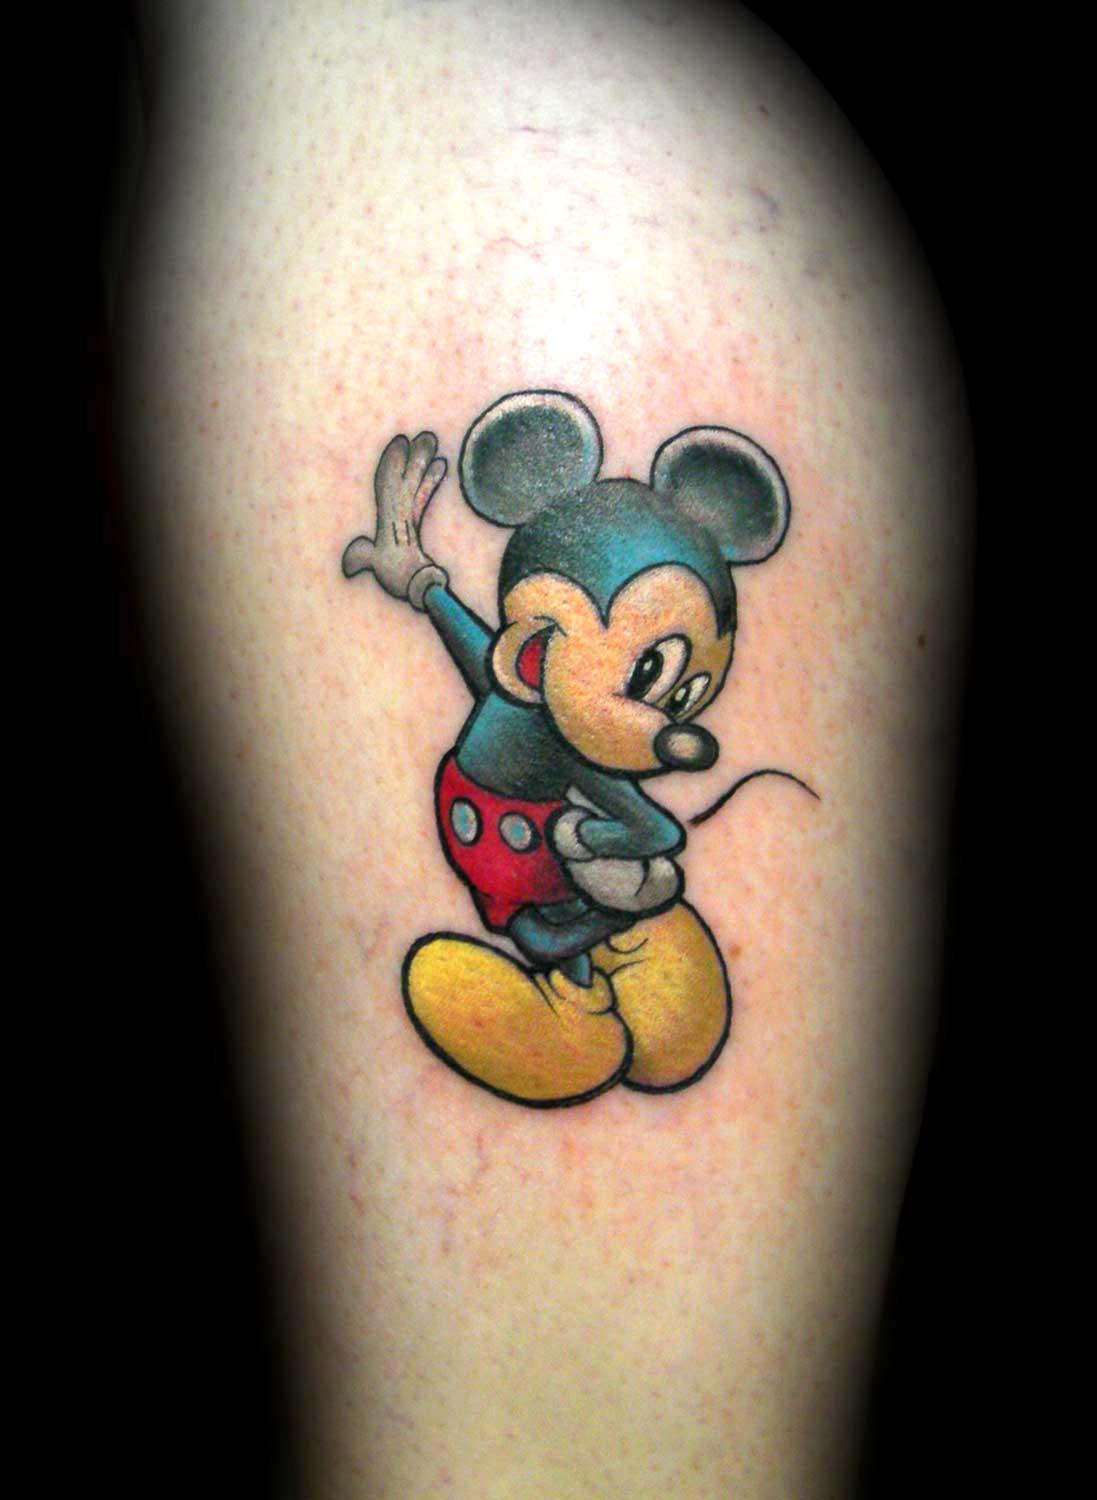 Jay Blackburn - Full color Mickey Mouse tattoo